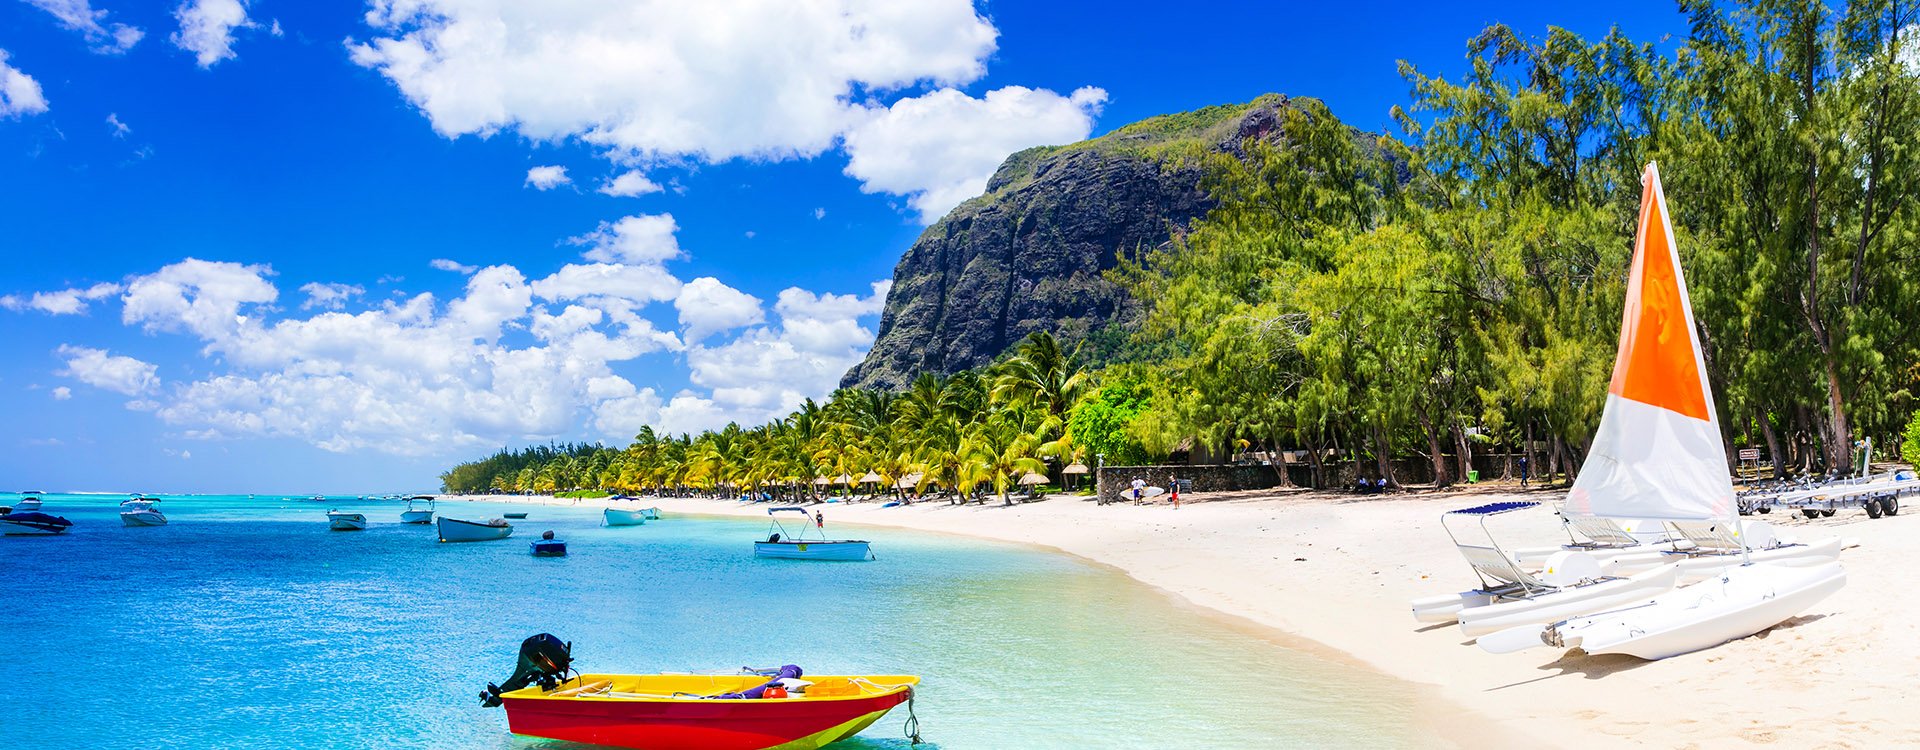 Water sport activities in beautiful Mauritius island